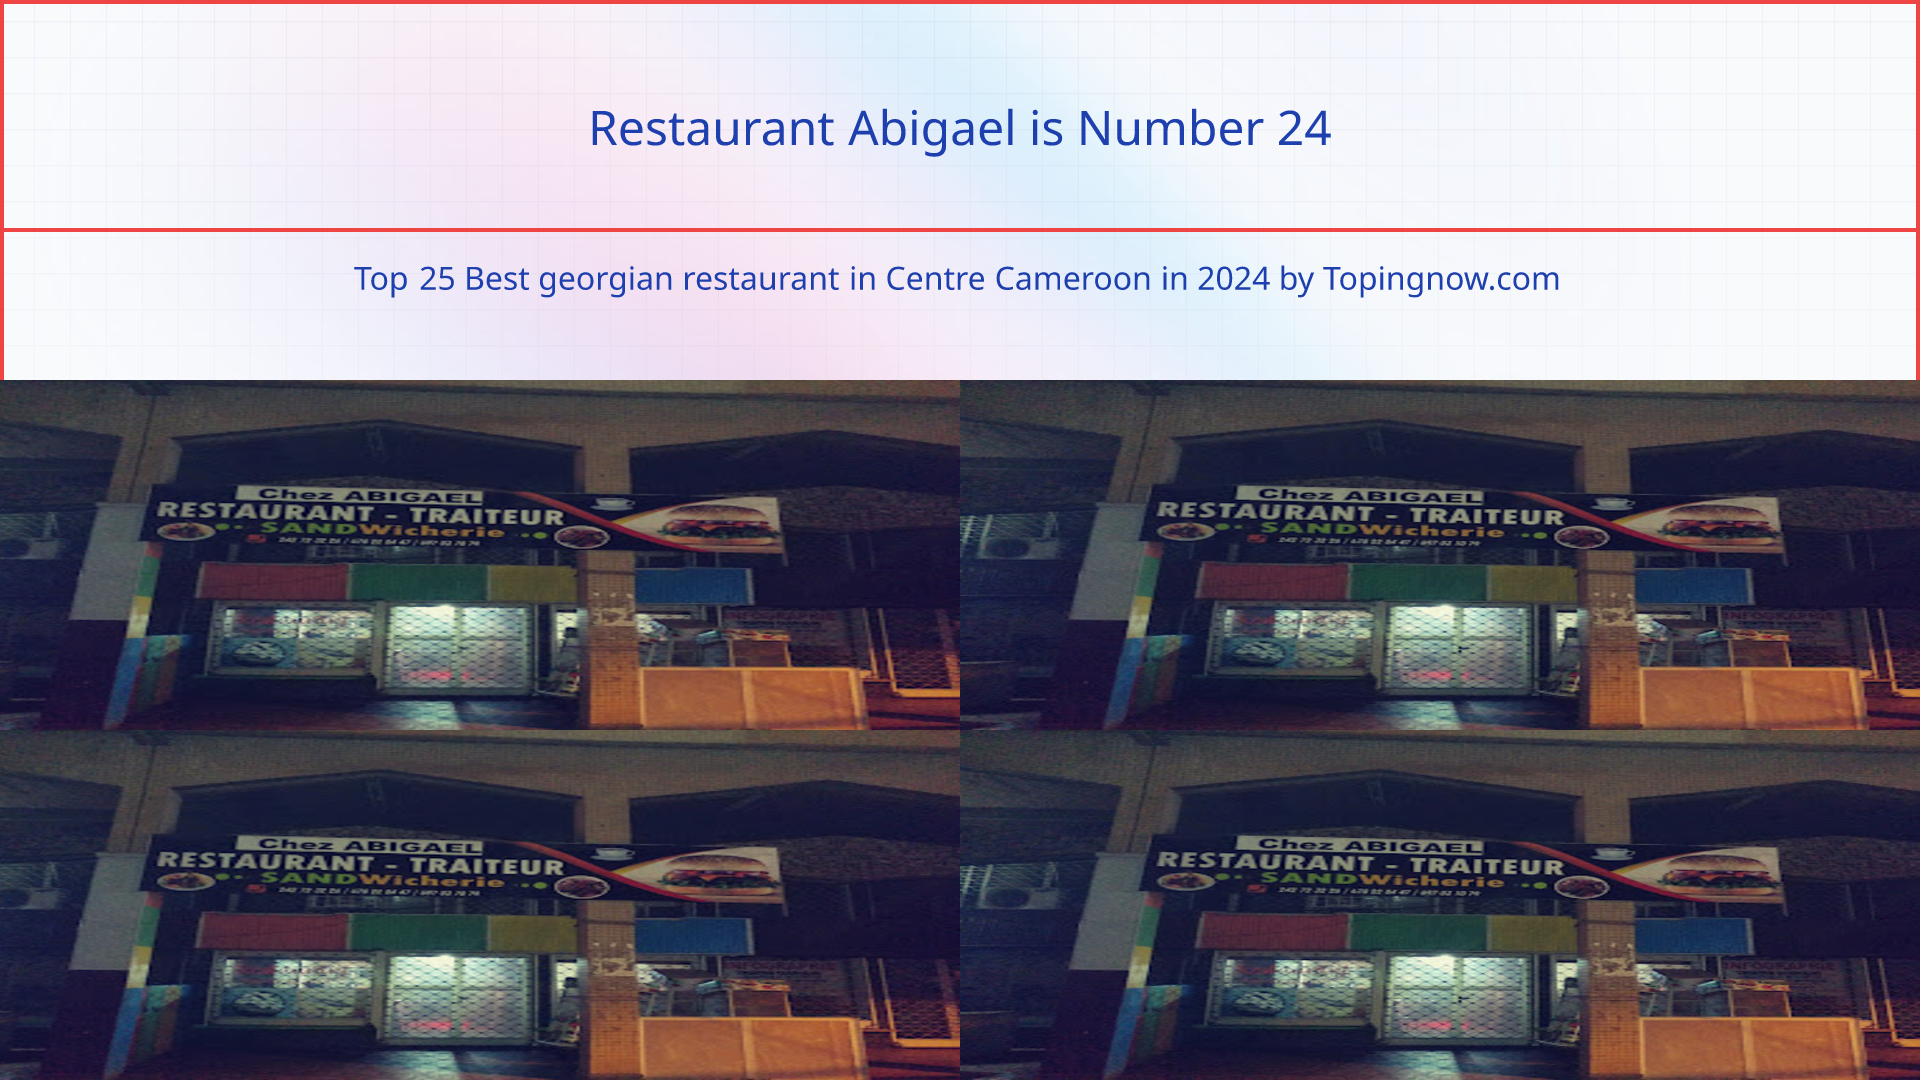 Restaurant Abigael: Top 25 Best georgian restaurant in Centre Cameroon in 2024